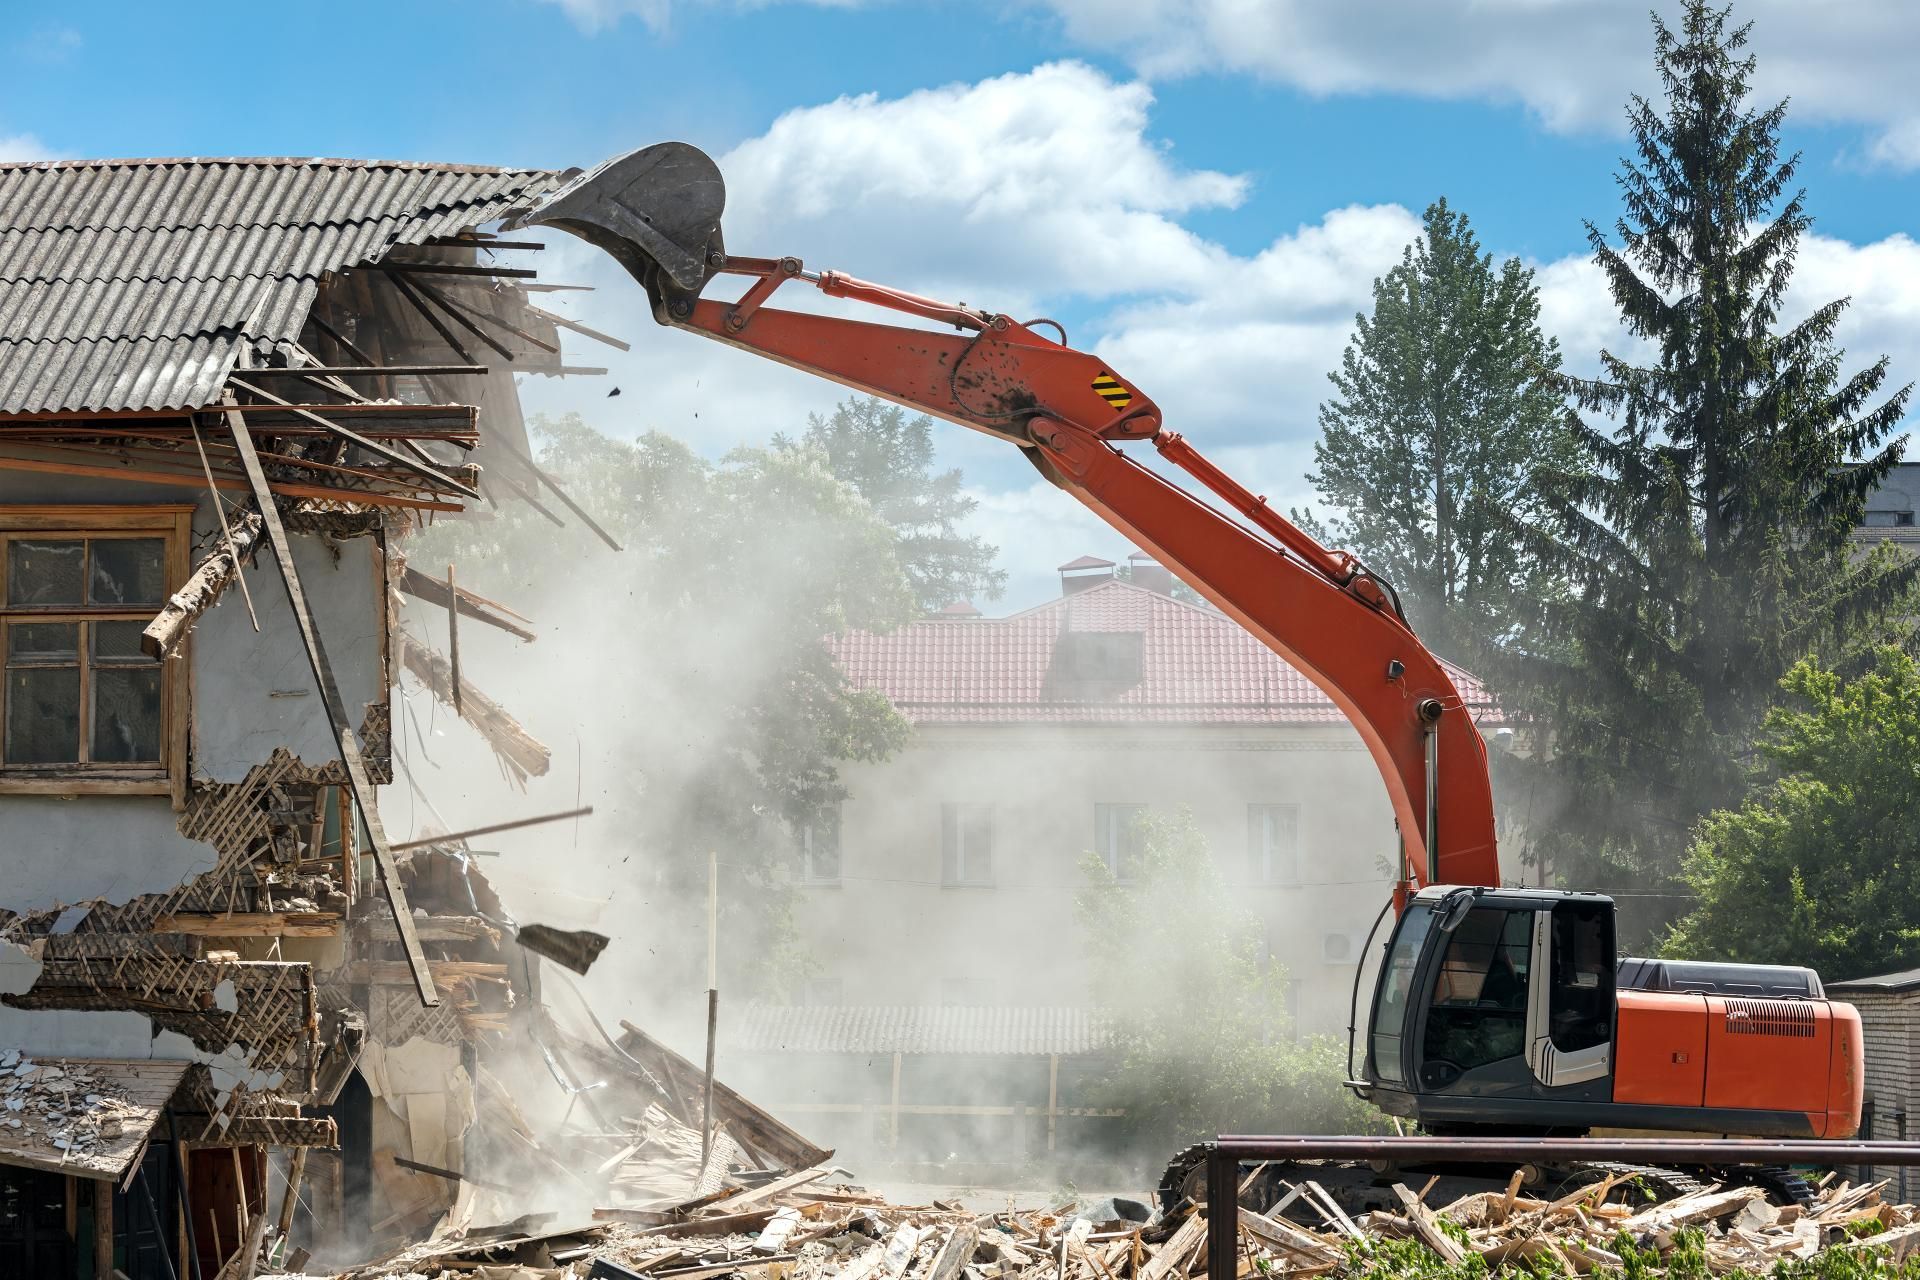 a large orange excavator is demolishing a building